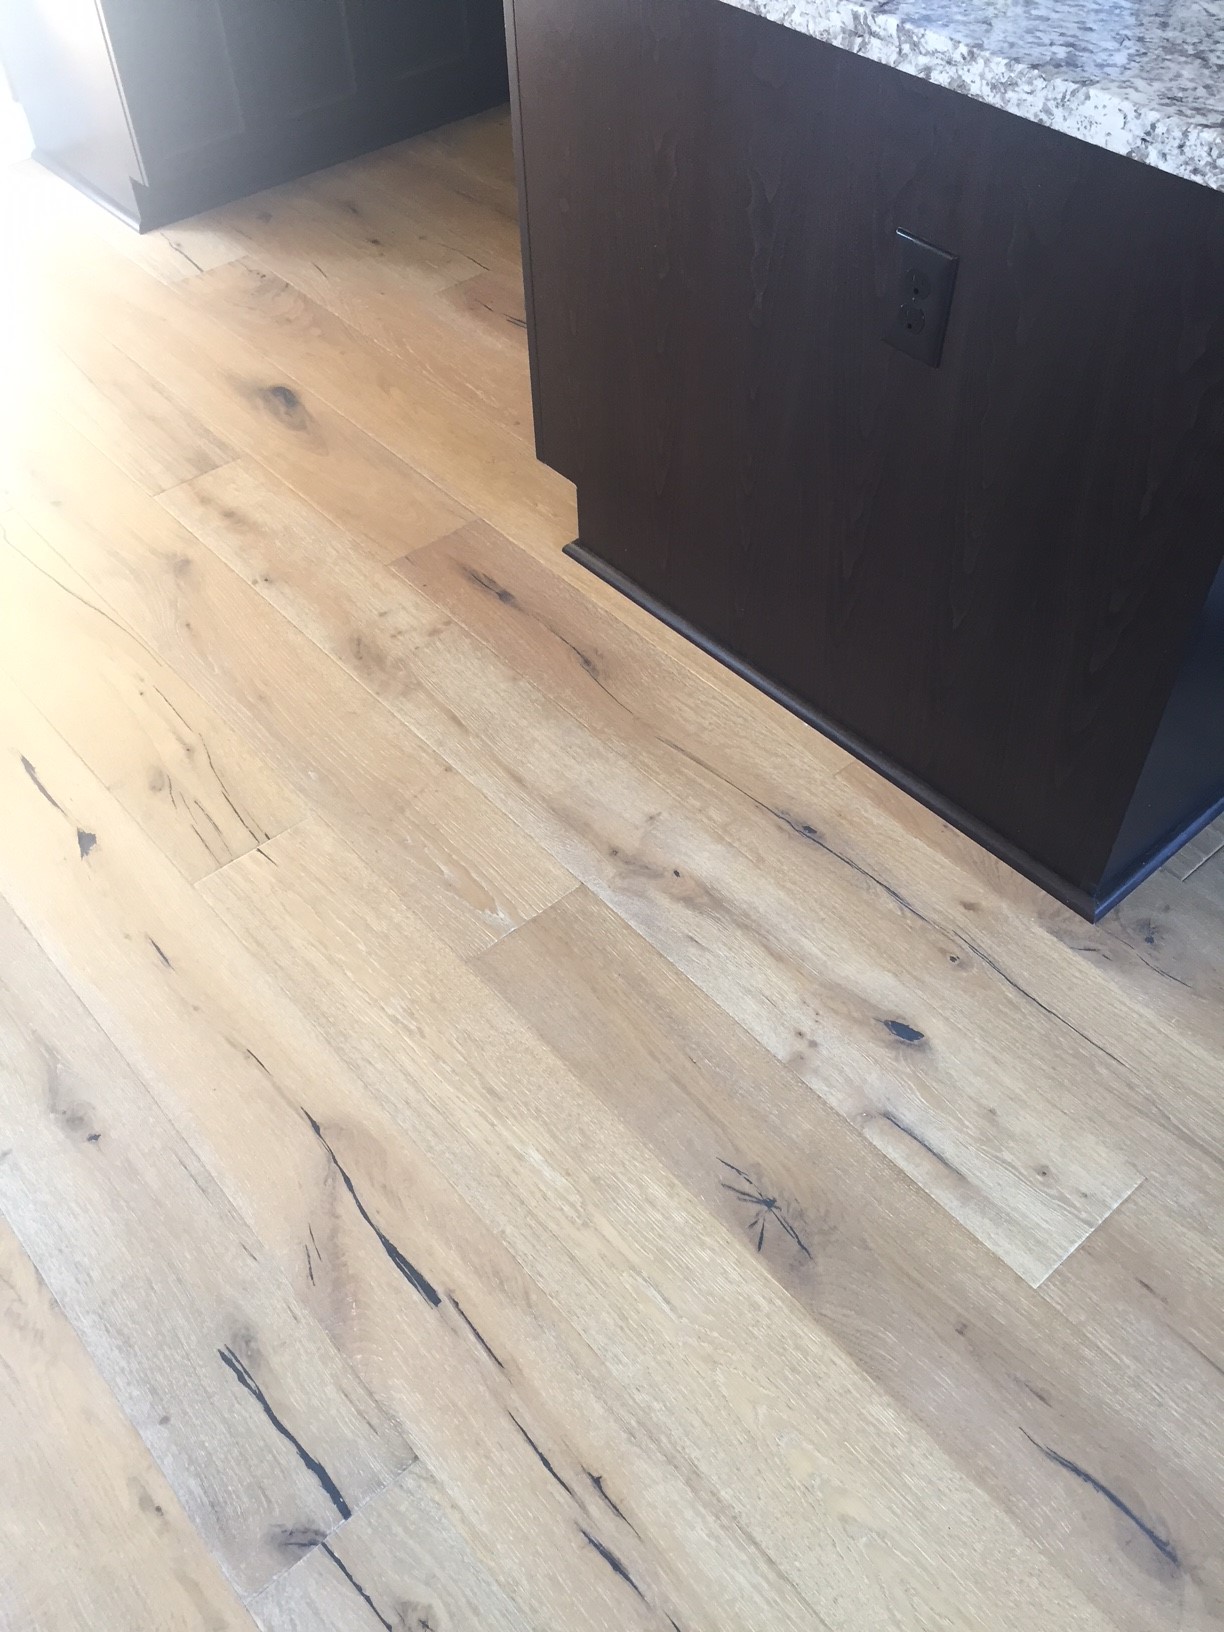 Hardwood Floors In Real Homes Images, California Classics Flooring Reviews